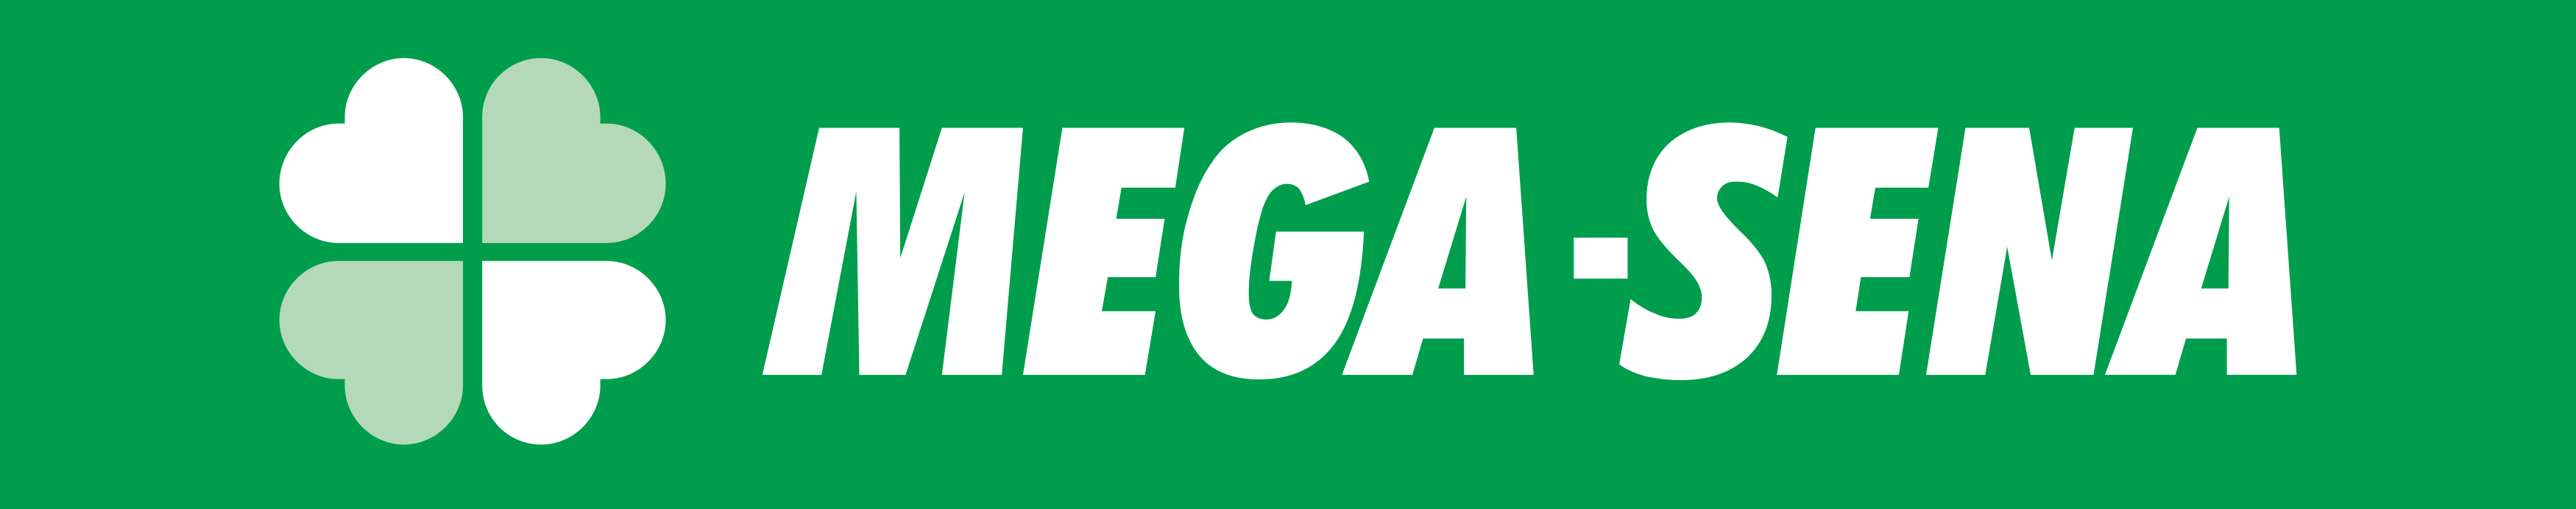 Mega Sena Logo.